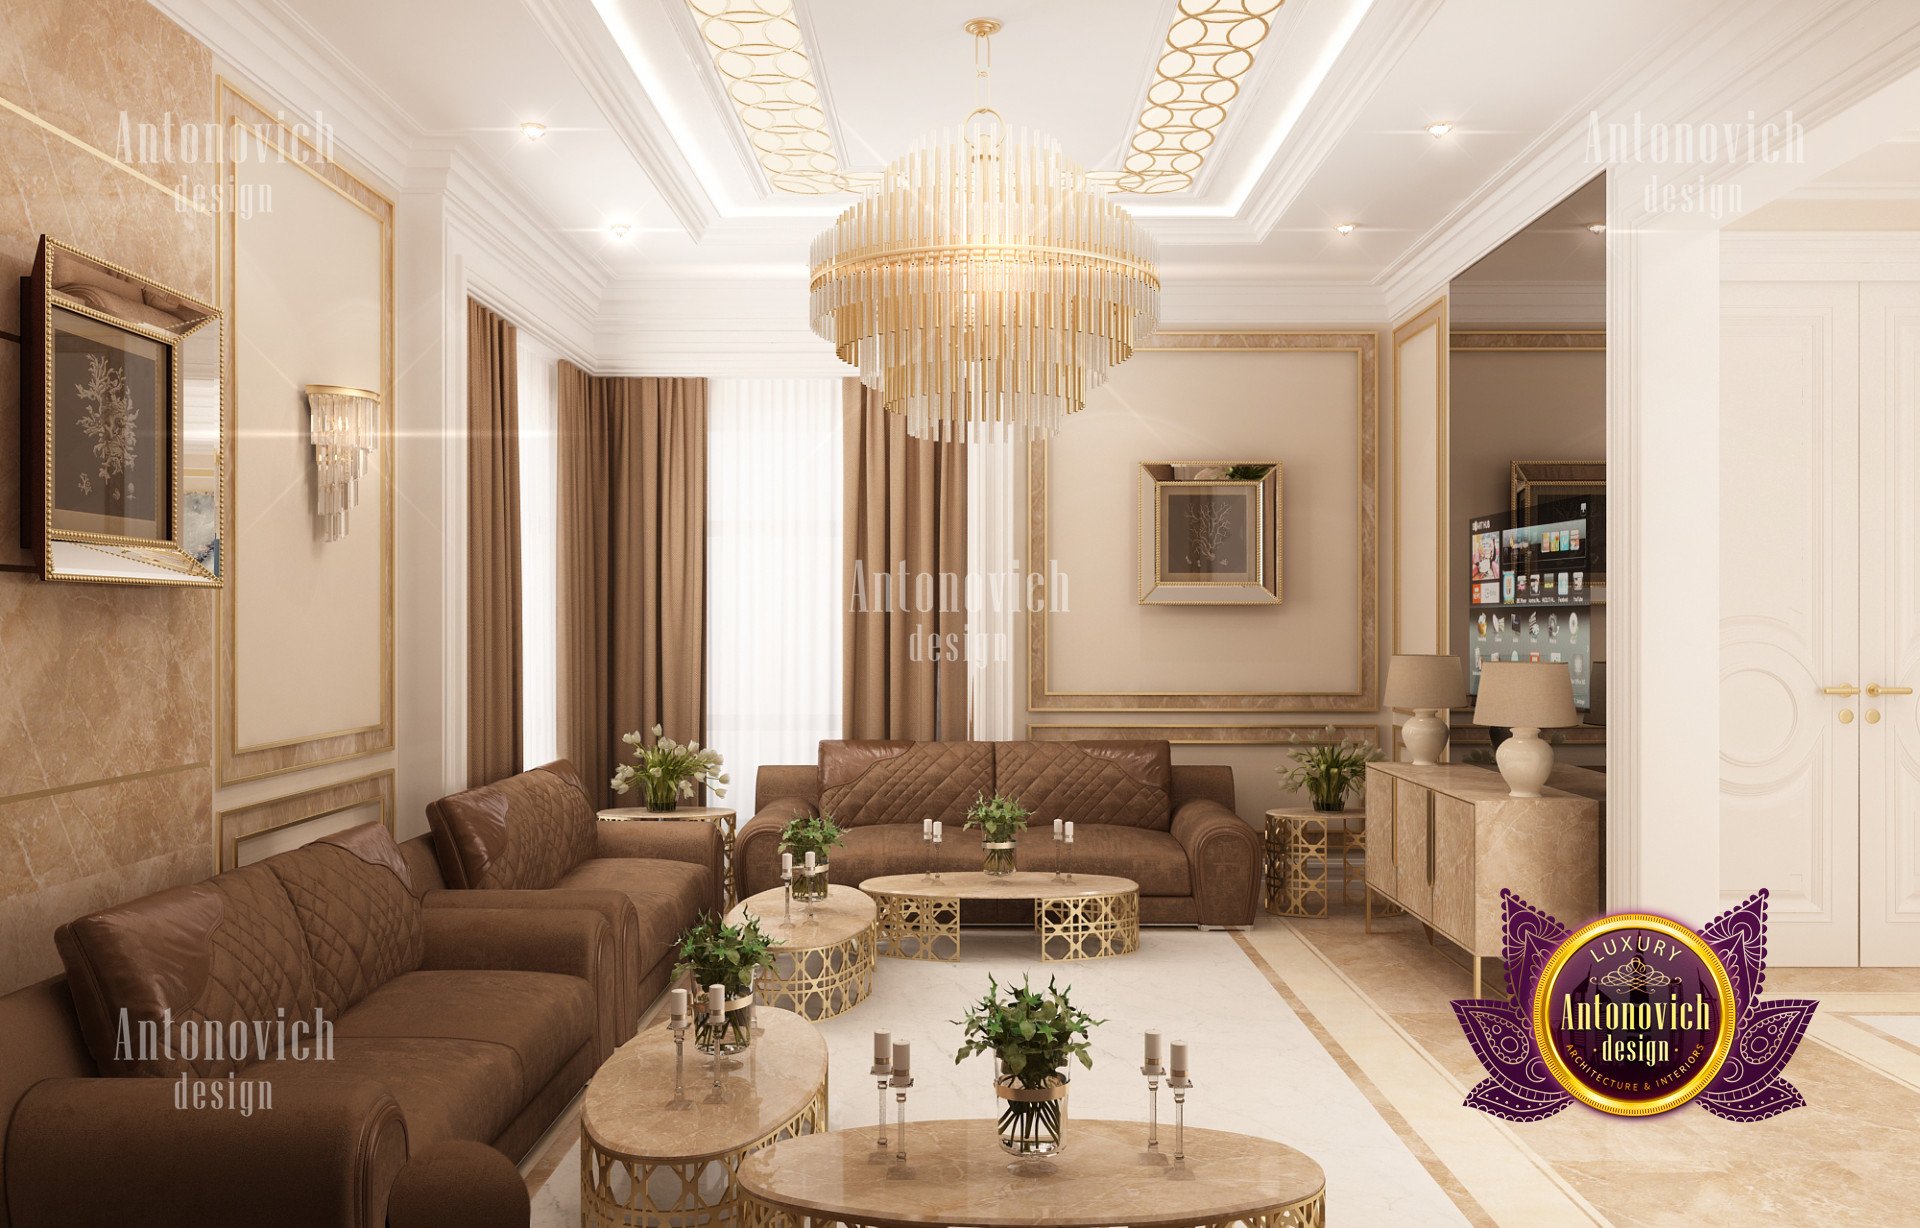 Nice living room - luxury interior design company in ...